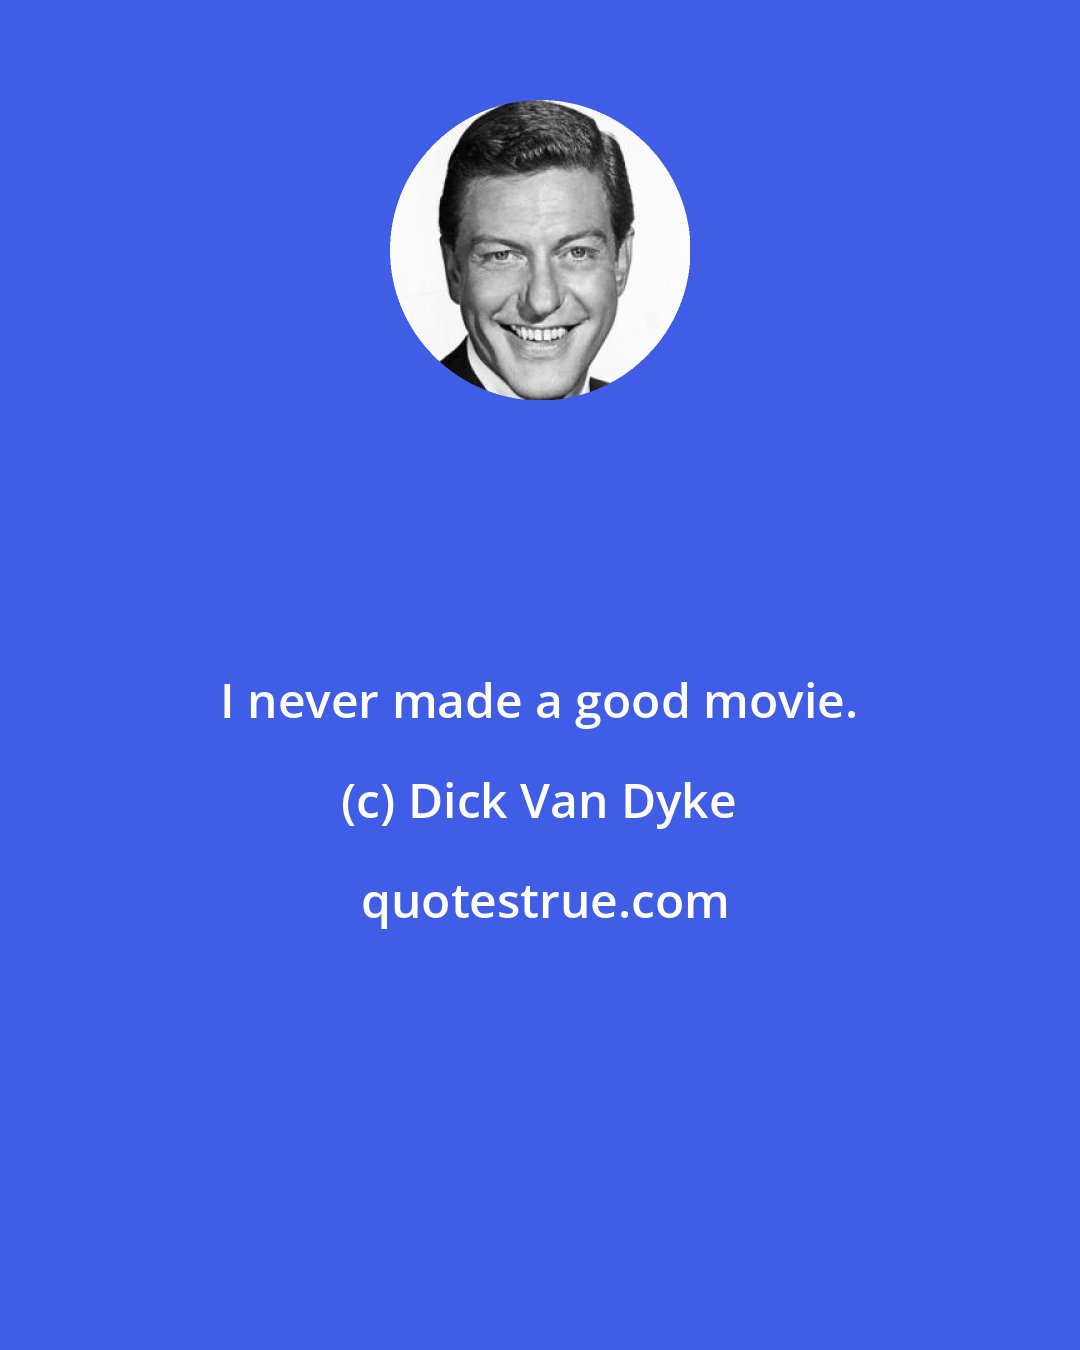 Dick Van Dyke: I never made a good movie.